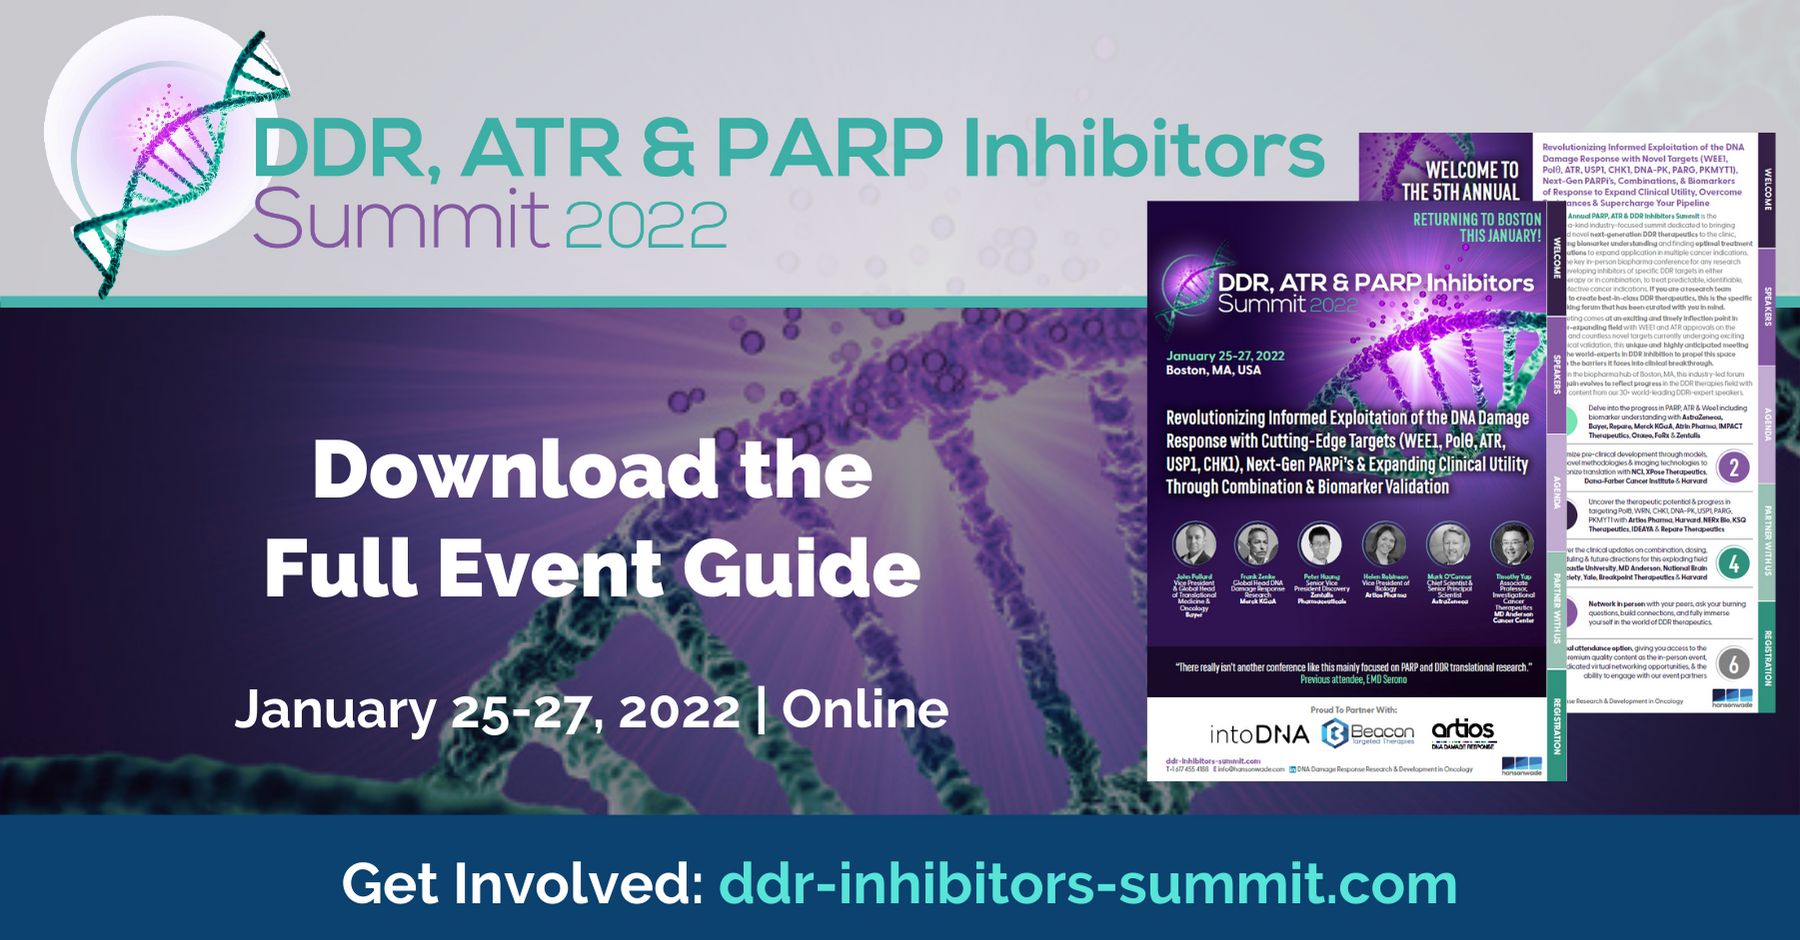 Digital DDR, ATR & PARP Inhibitors Summit 2022, Online Event